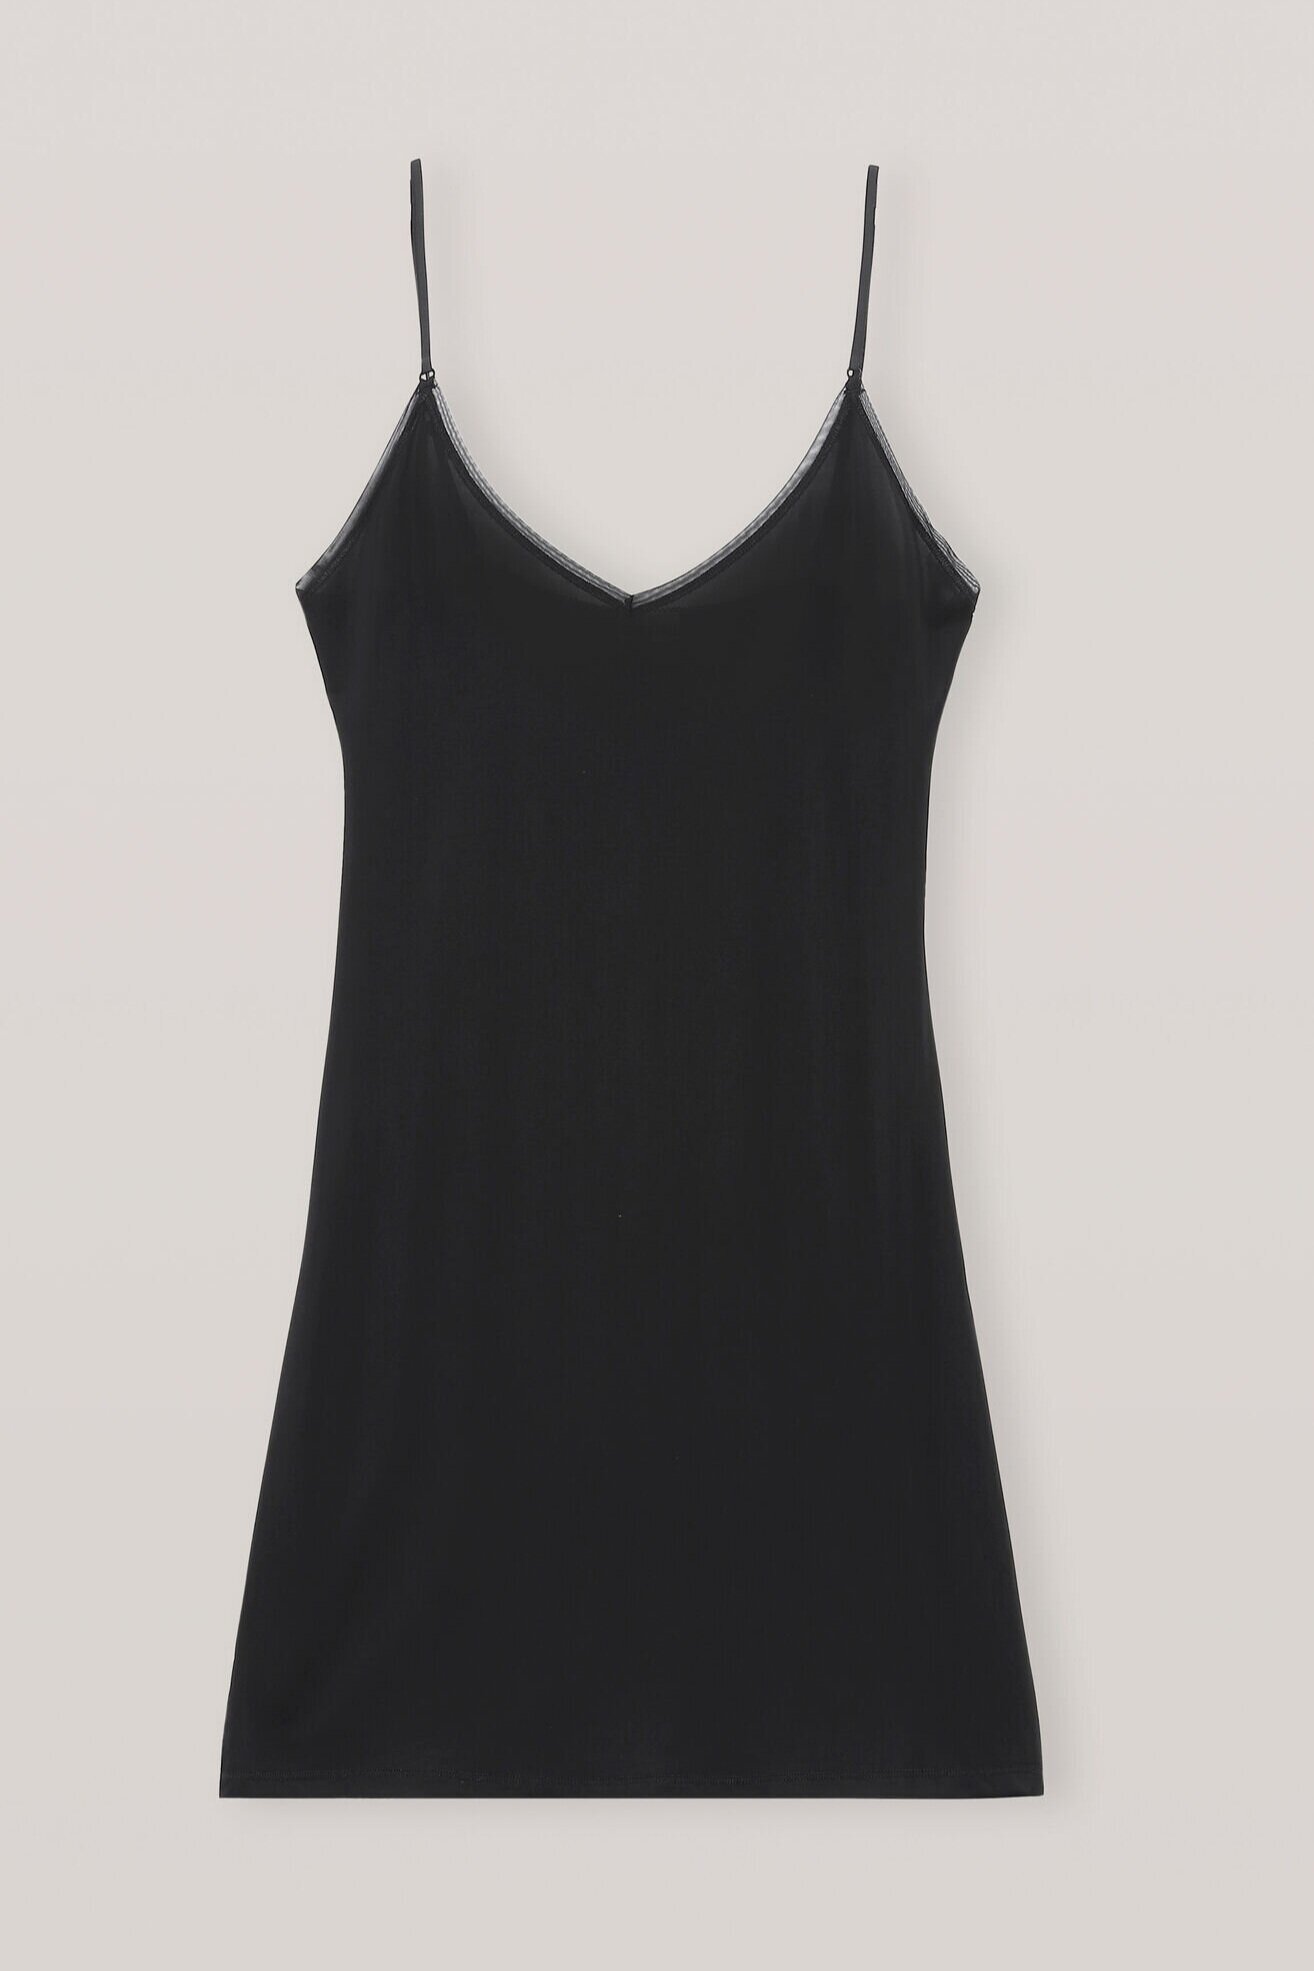 Ganni Slip Dress ($115)